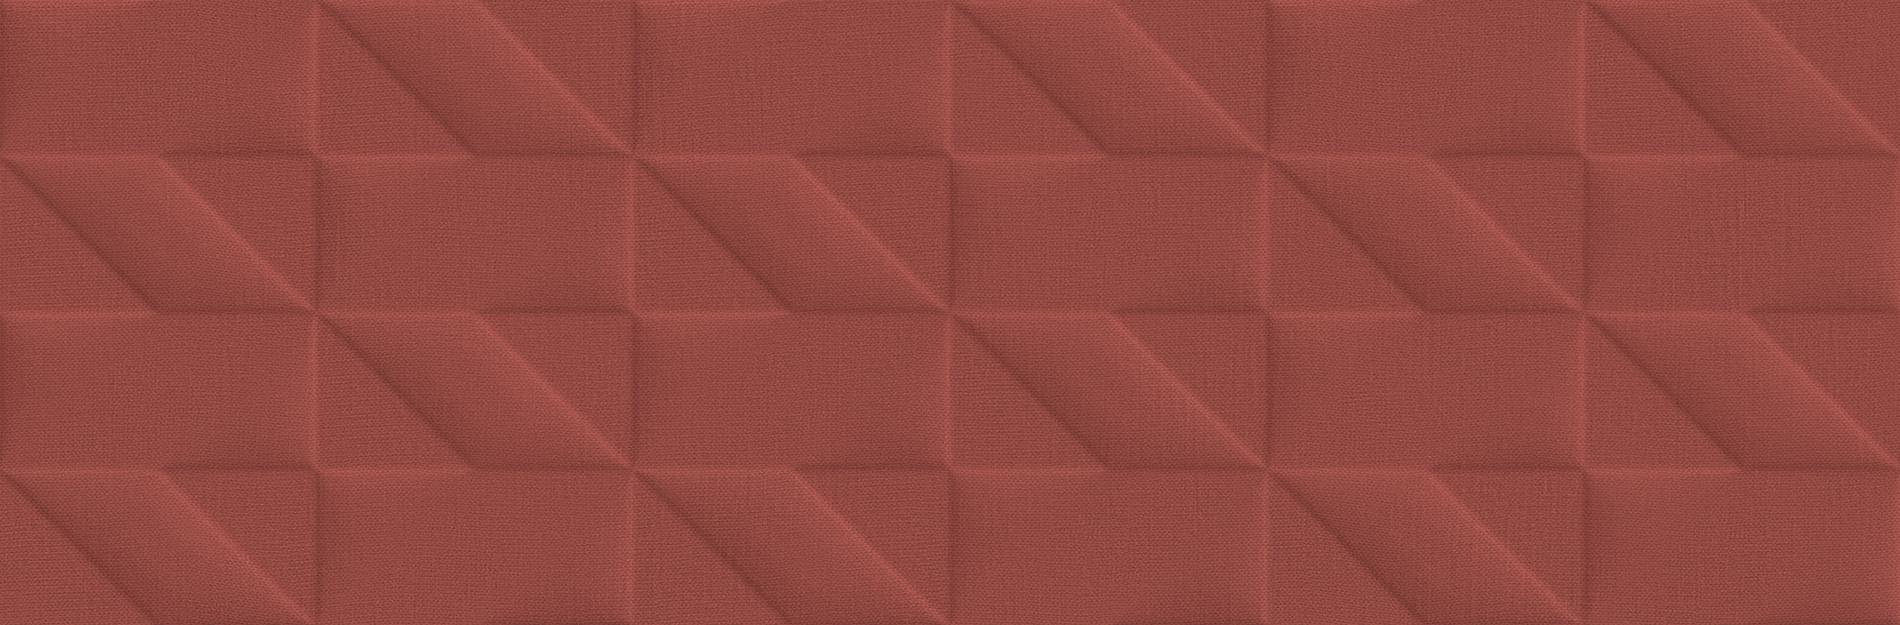 Marazzi Outfit Red Struttura Tetris 3 25x76